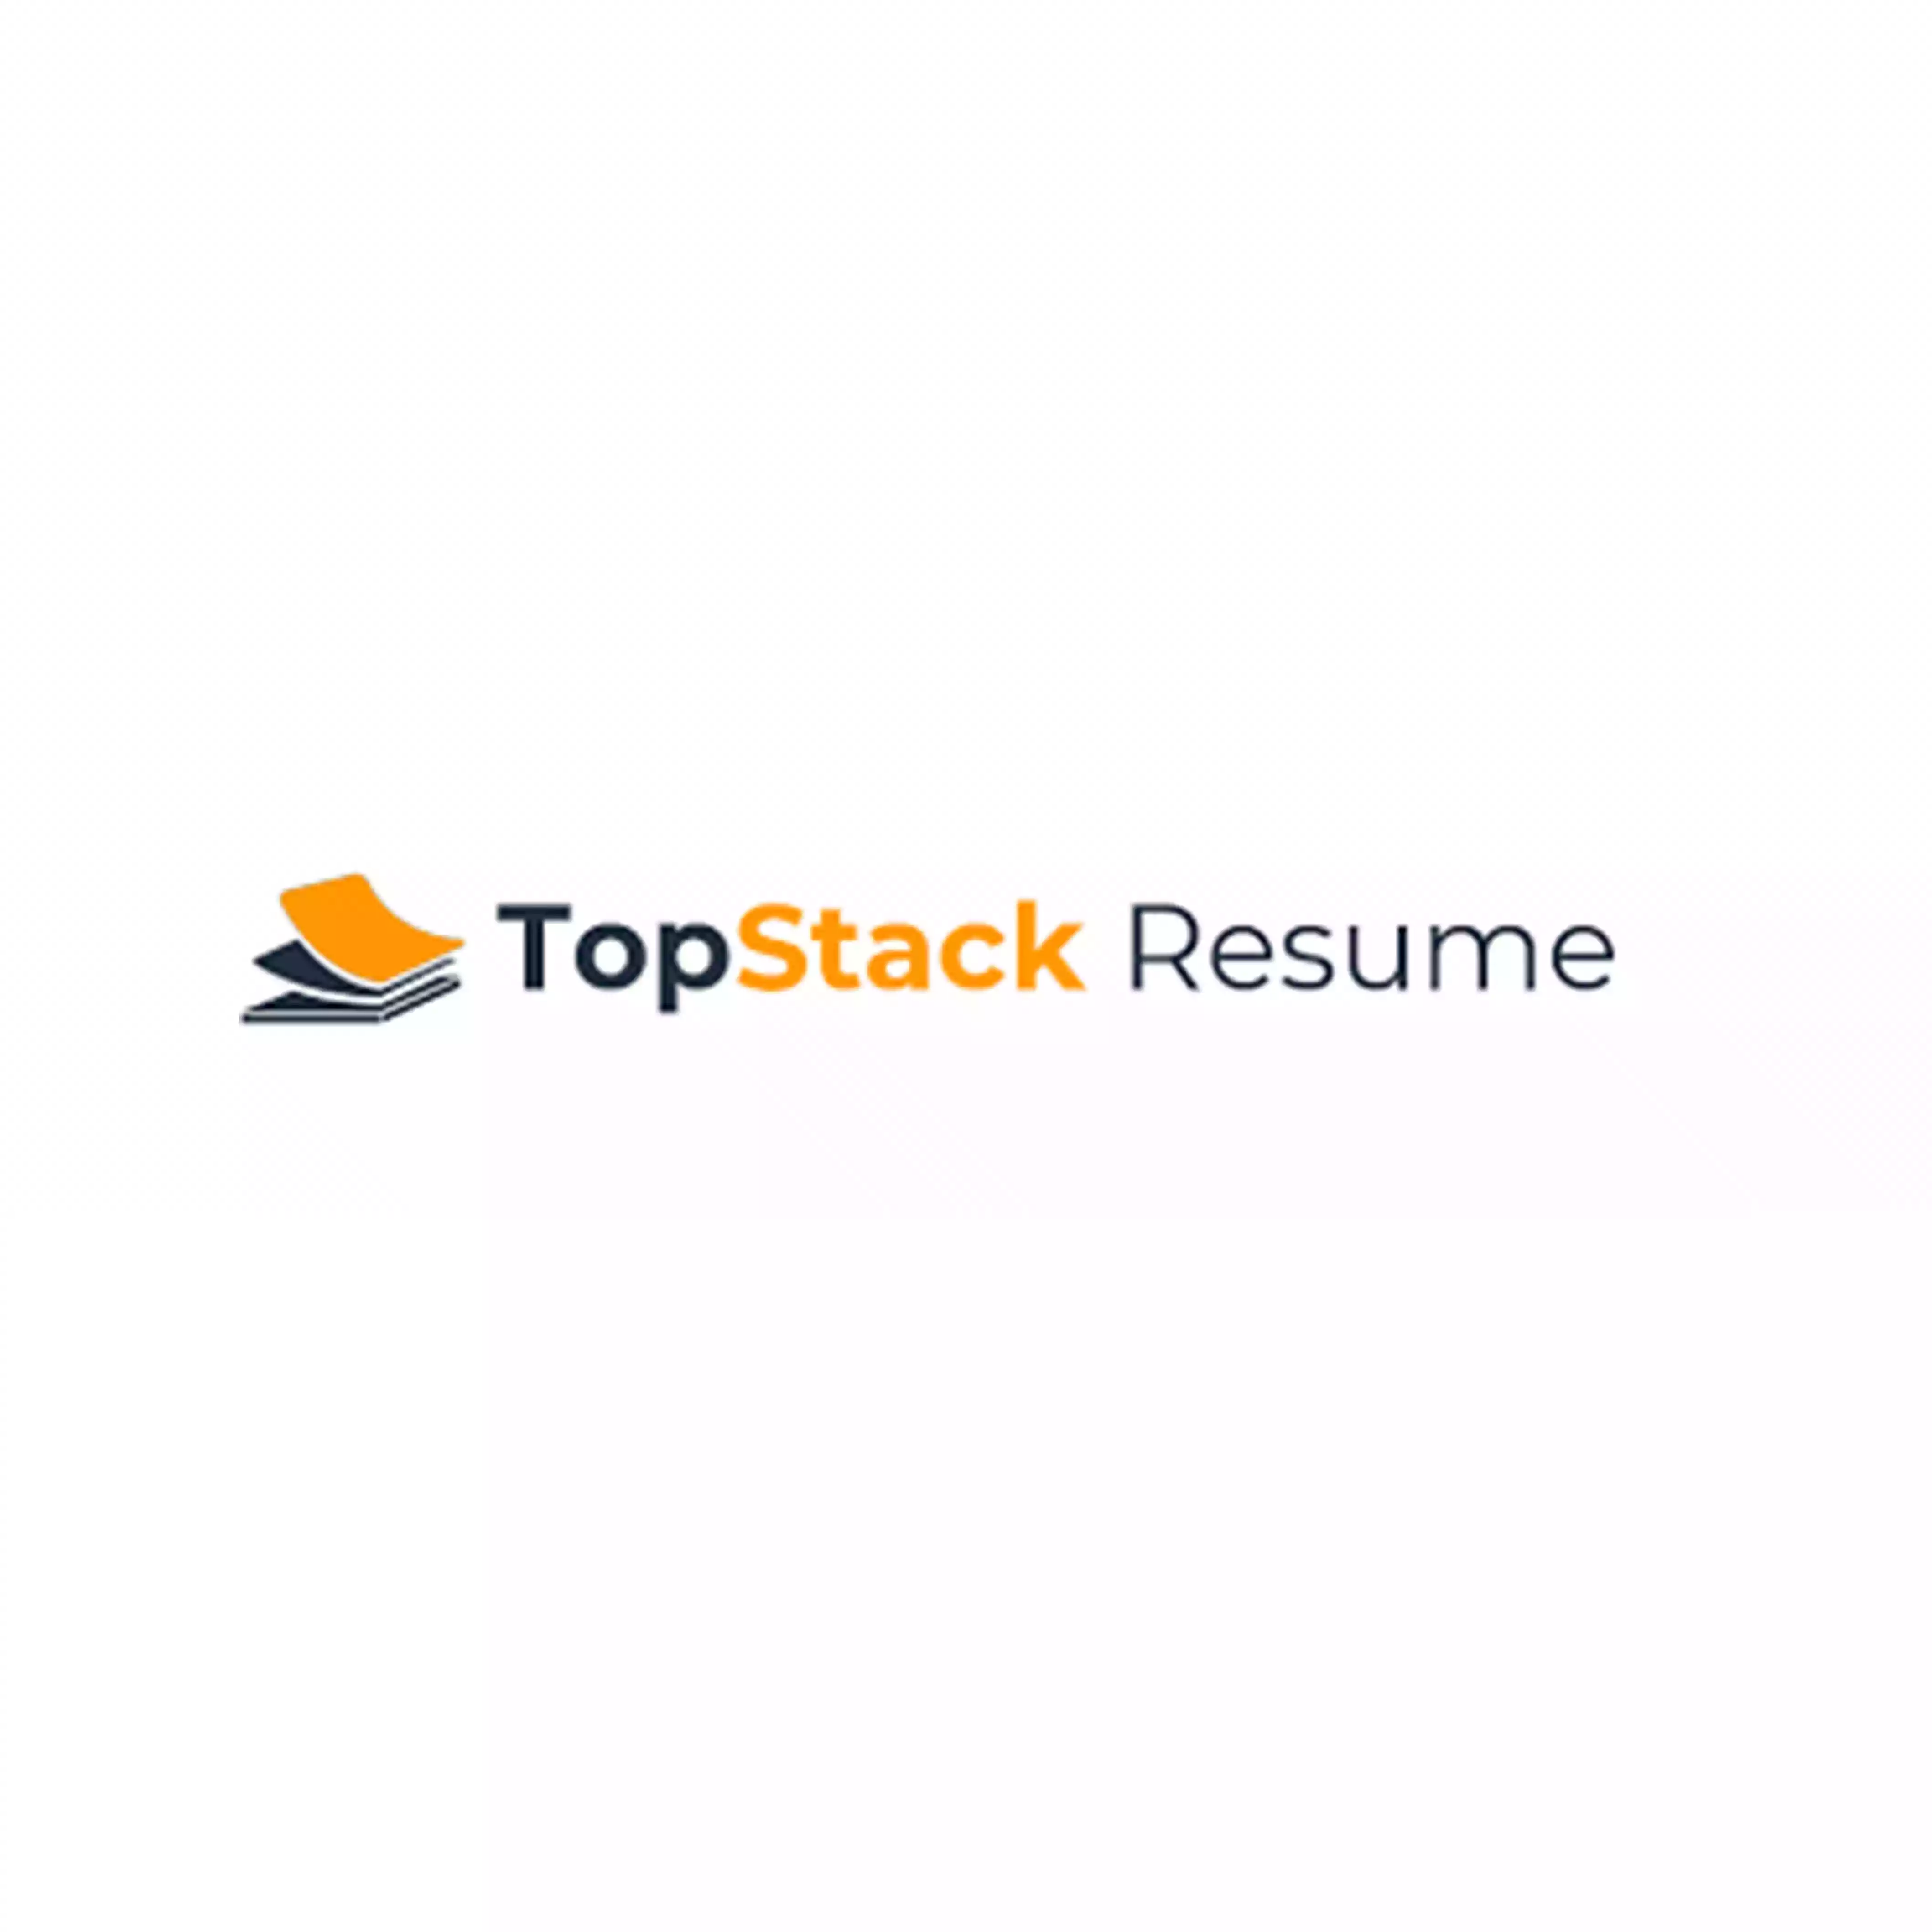 Shop TopStack Resume logo